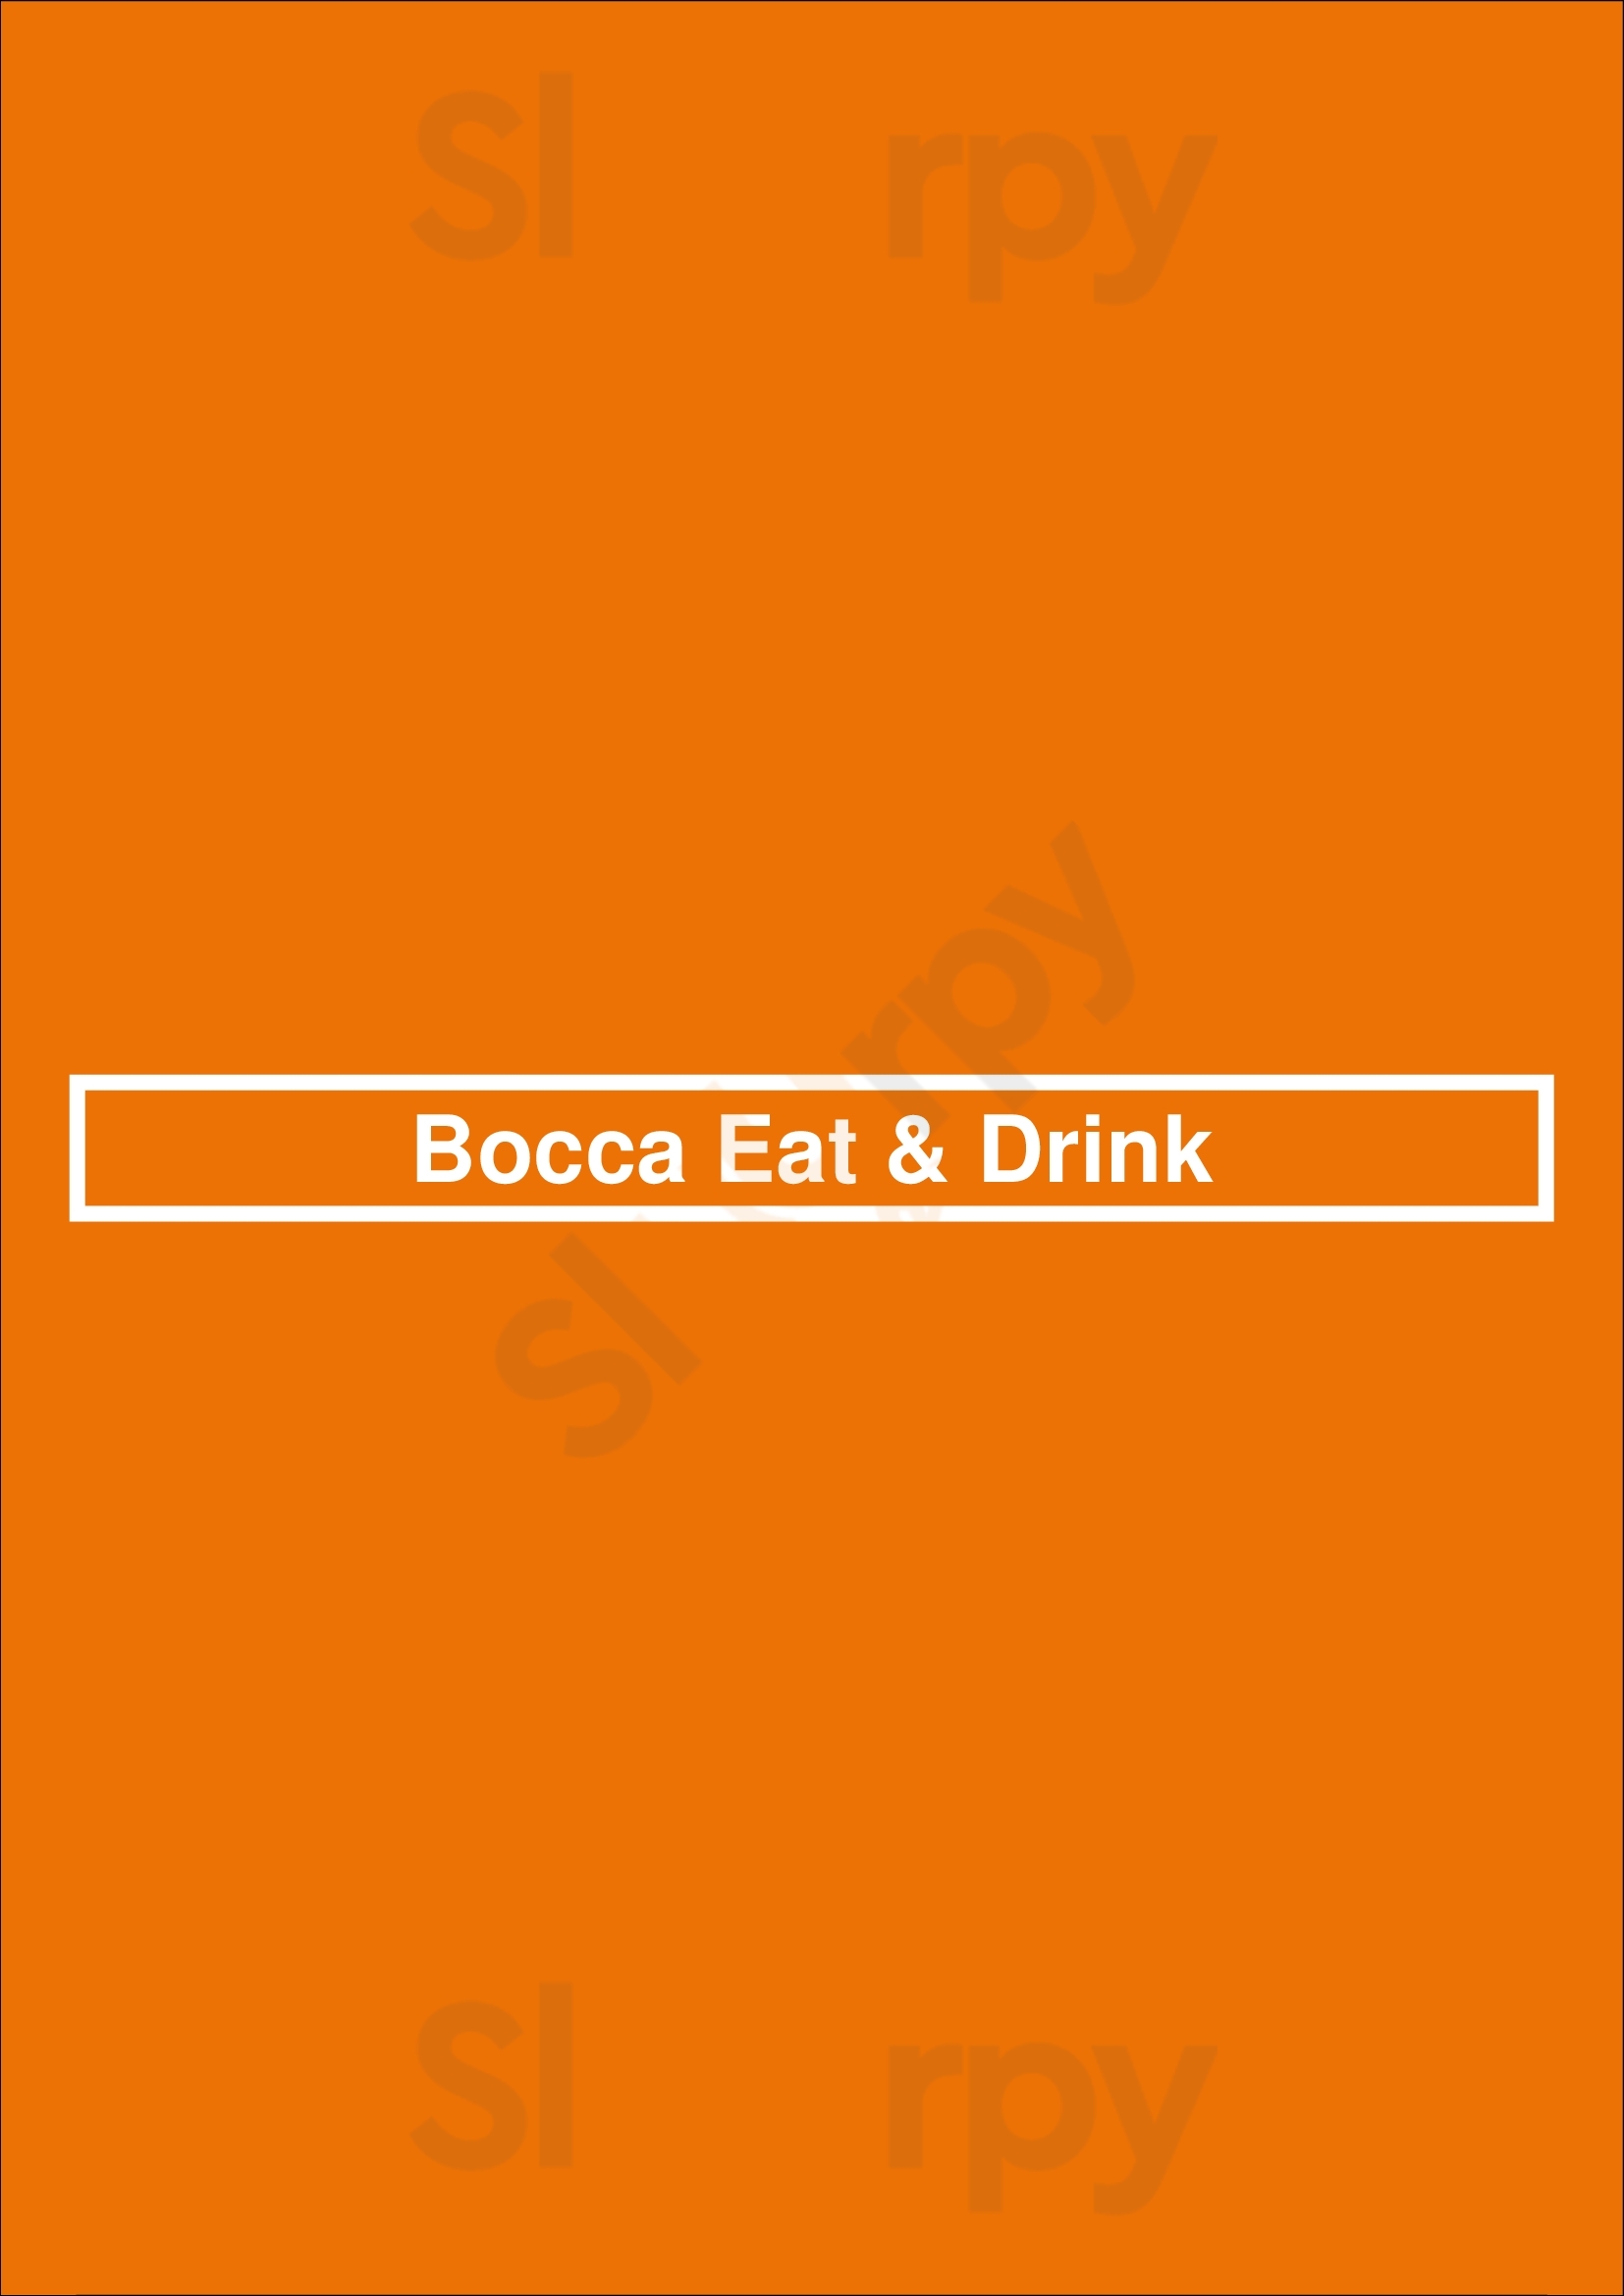 Bocca Eat & Drink Porto Menu - 1